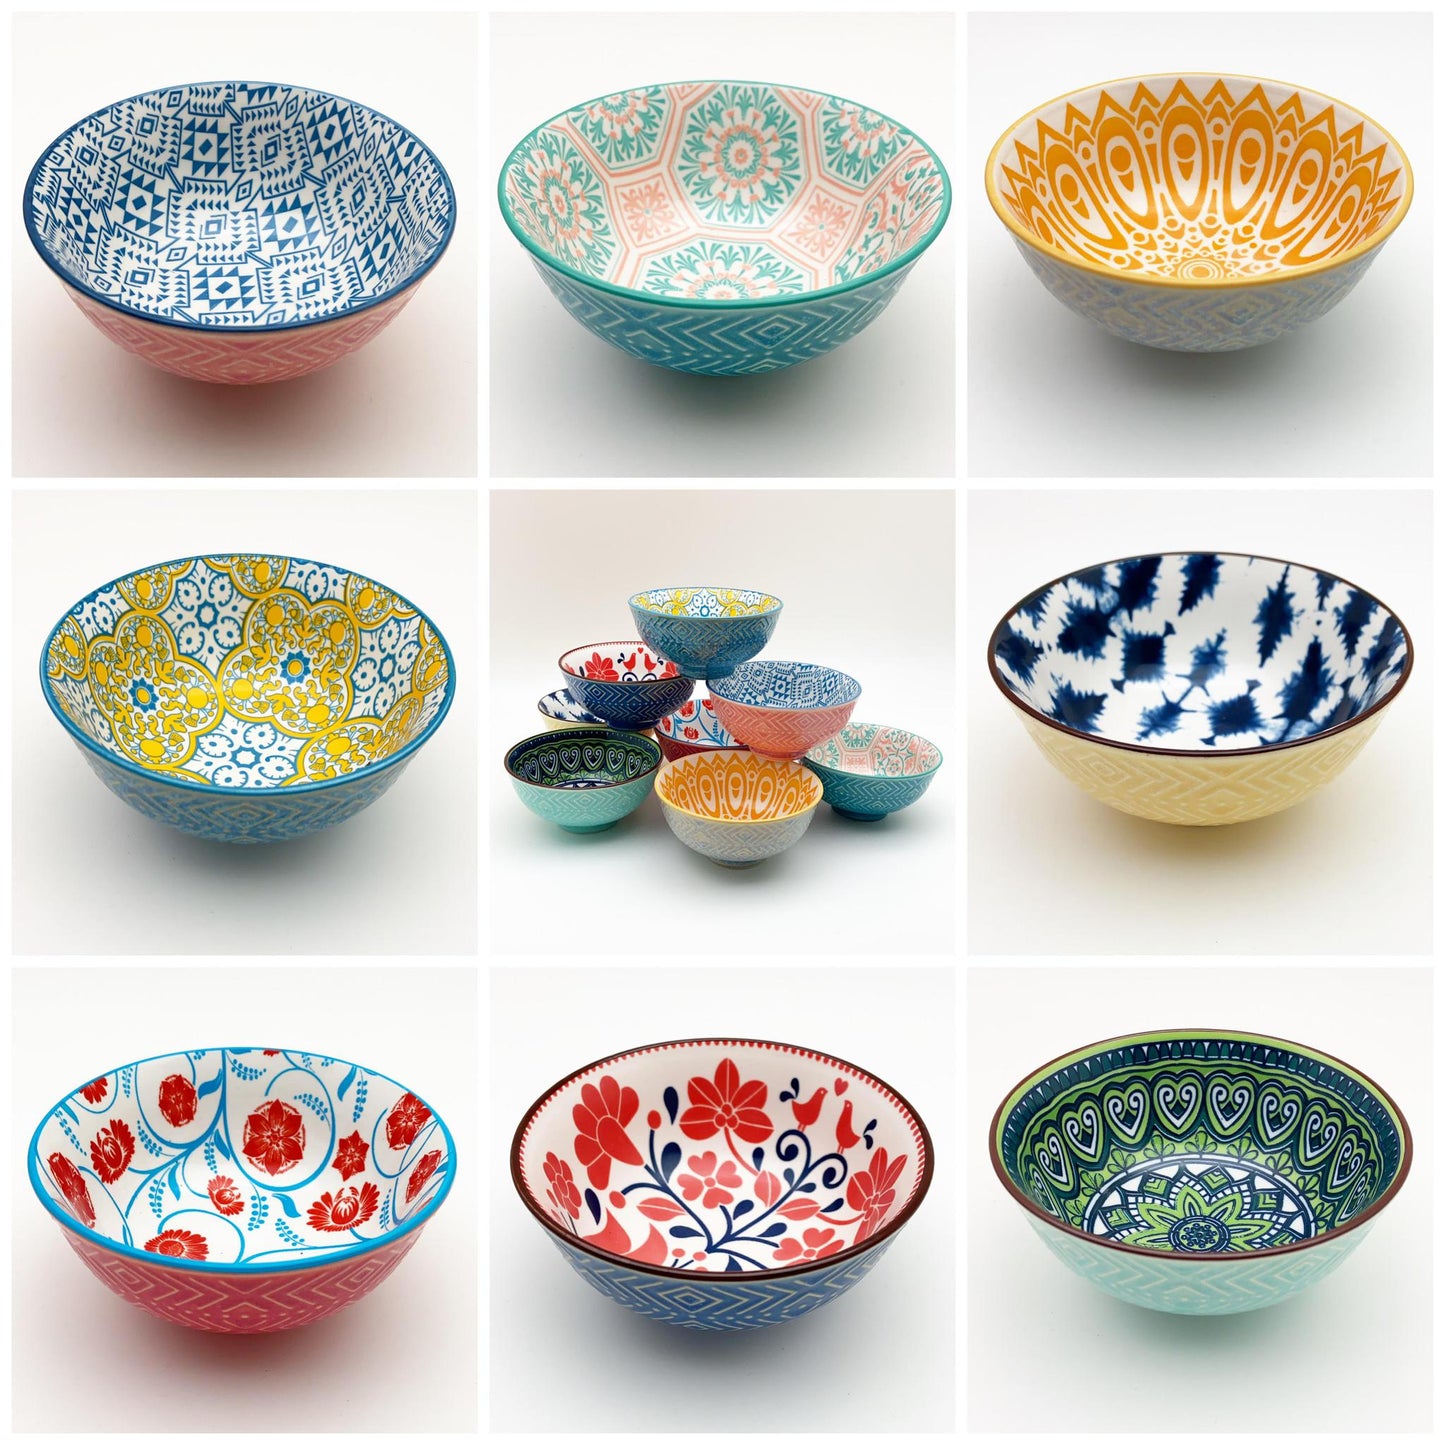 Bowl - Red & Blue - Ceramic